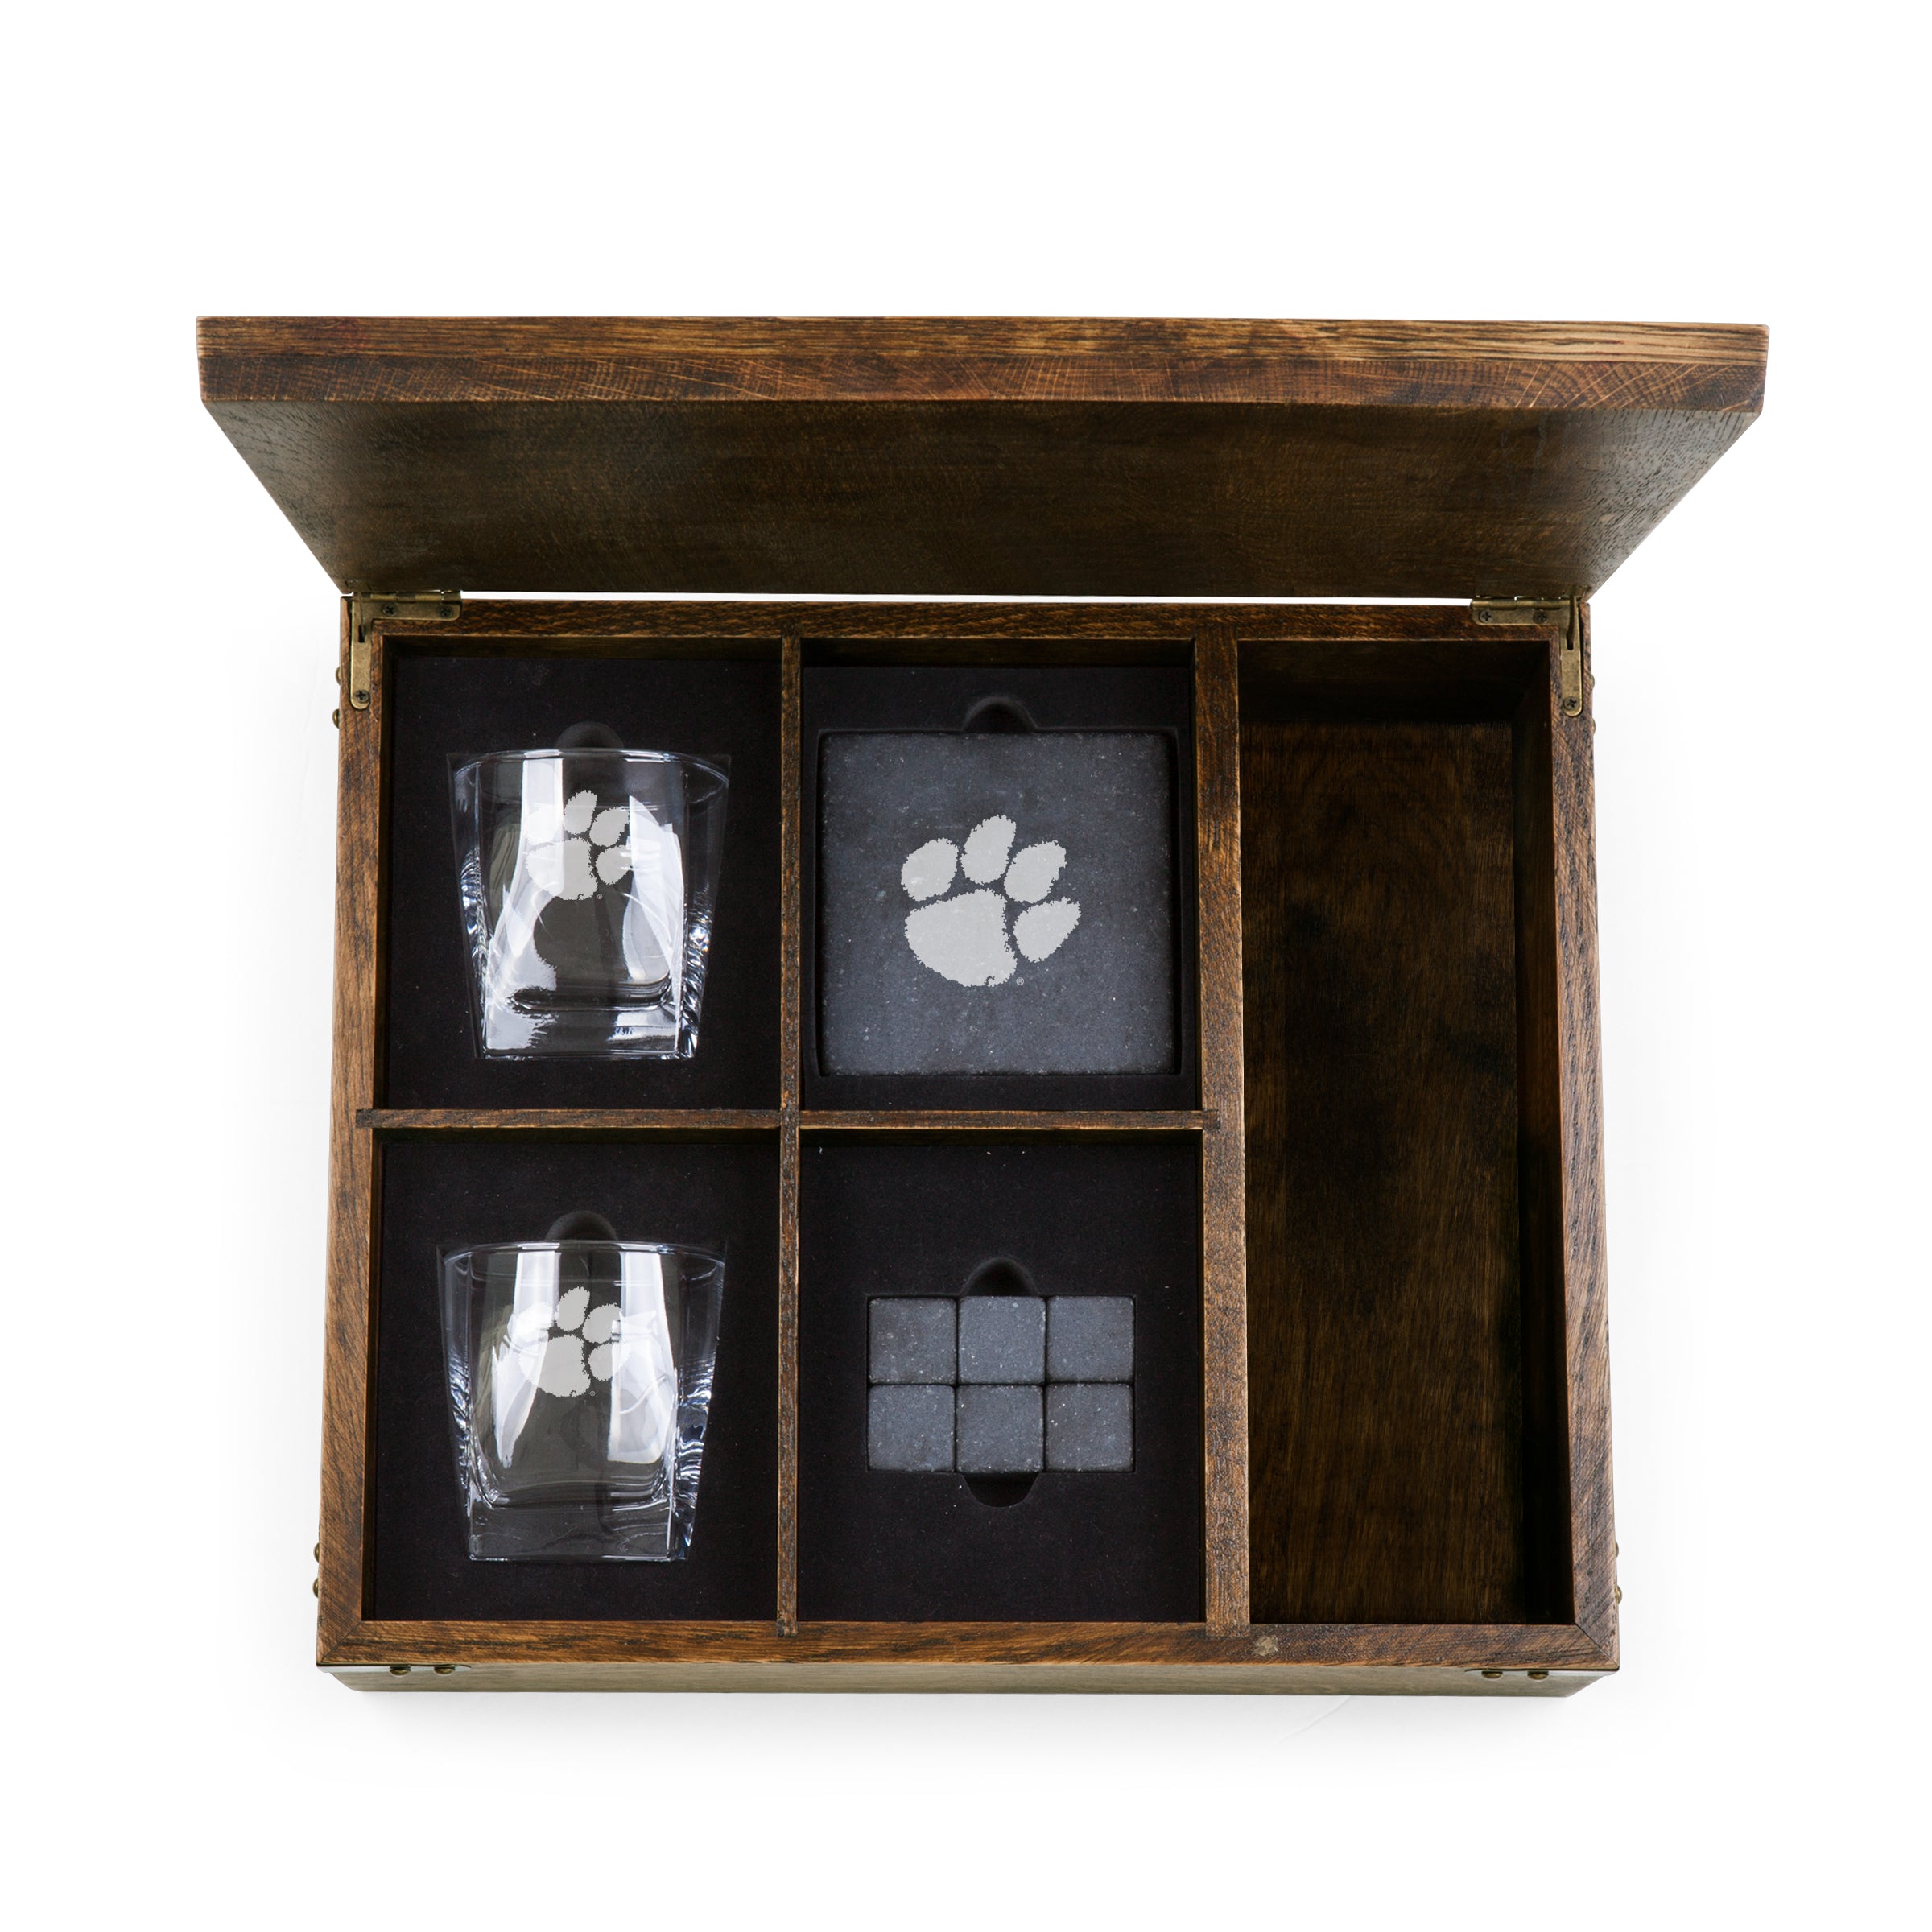 Clemson Tigers - Whiskey Box Gift Set